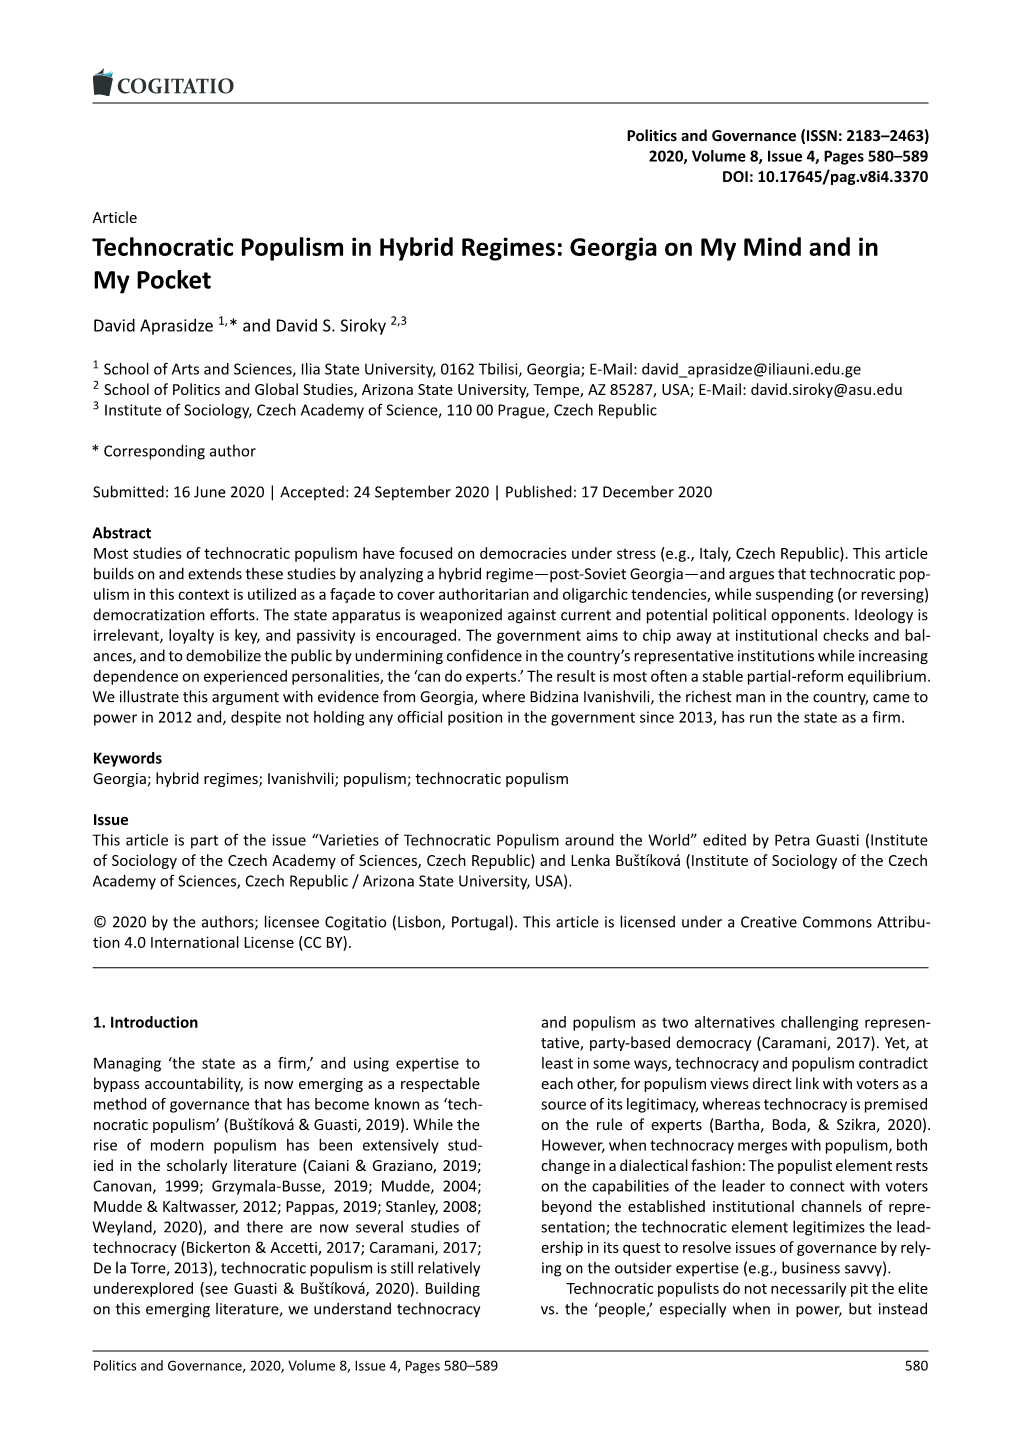 Technocratic Populism in Hybrid Regimes: Georgia on My Mind and in My Pocket